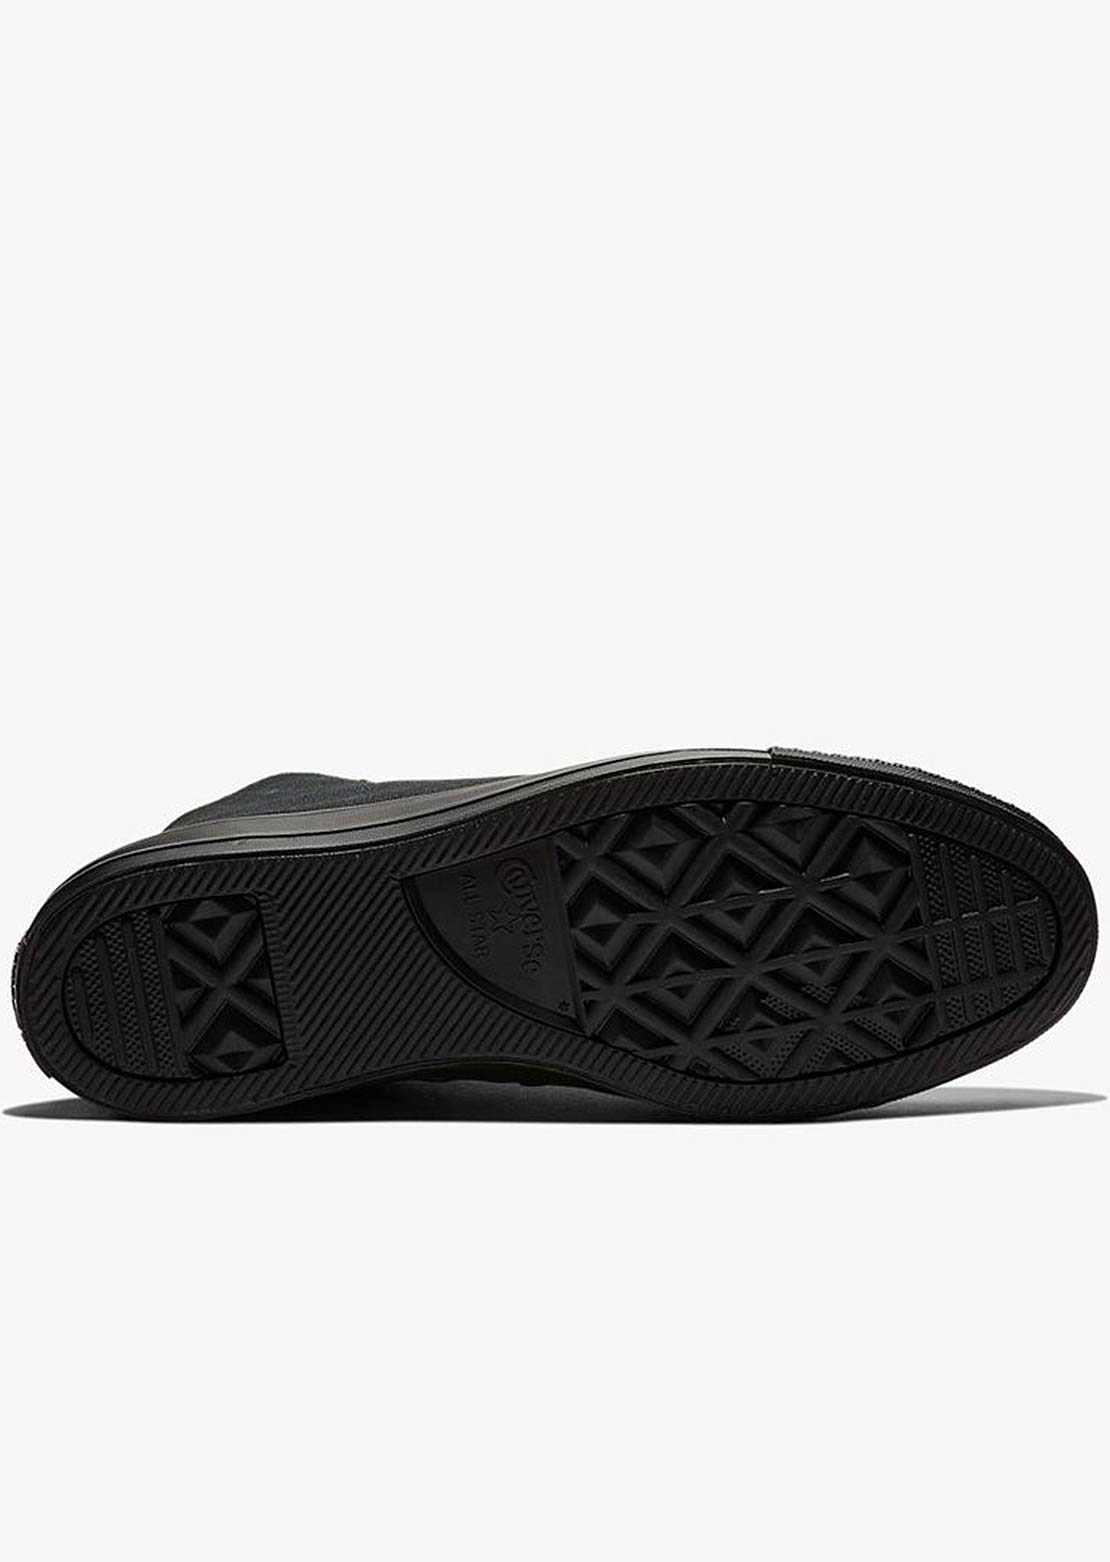 Converse Unisex Chuck Taylor All Star High-Top Shoes Black Monochrome